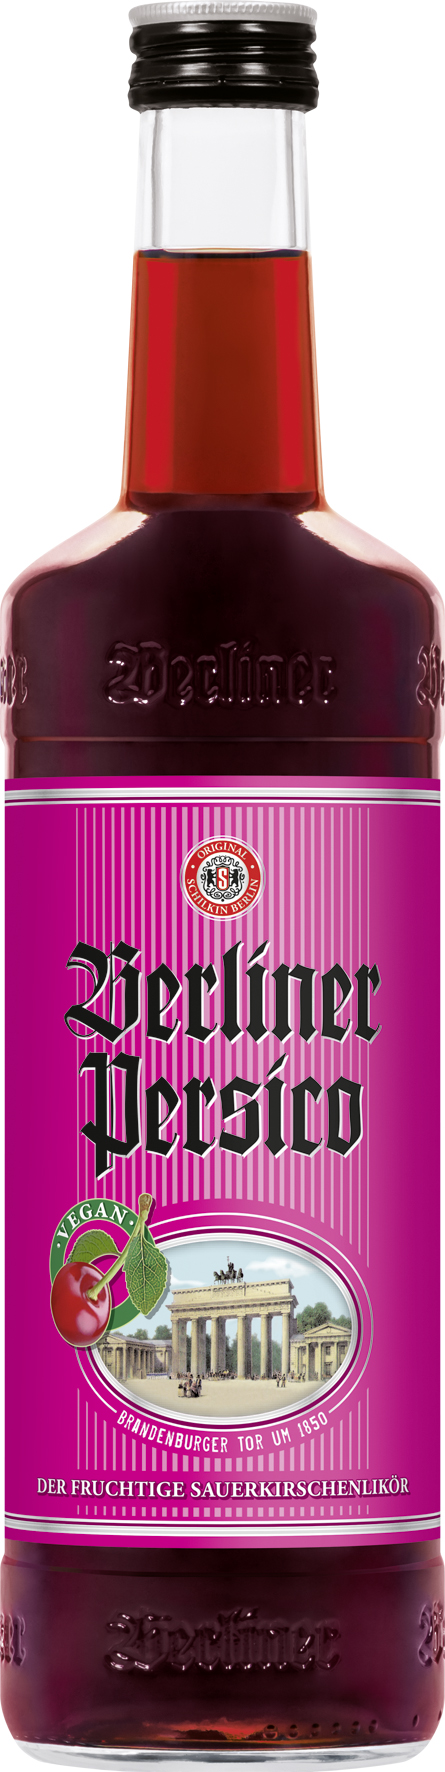 Berliner Persico - Kirschlikör - 0,7l 16%vol.